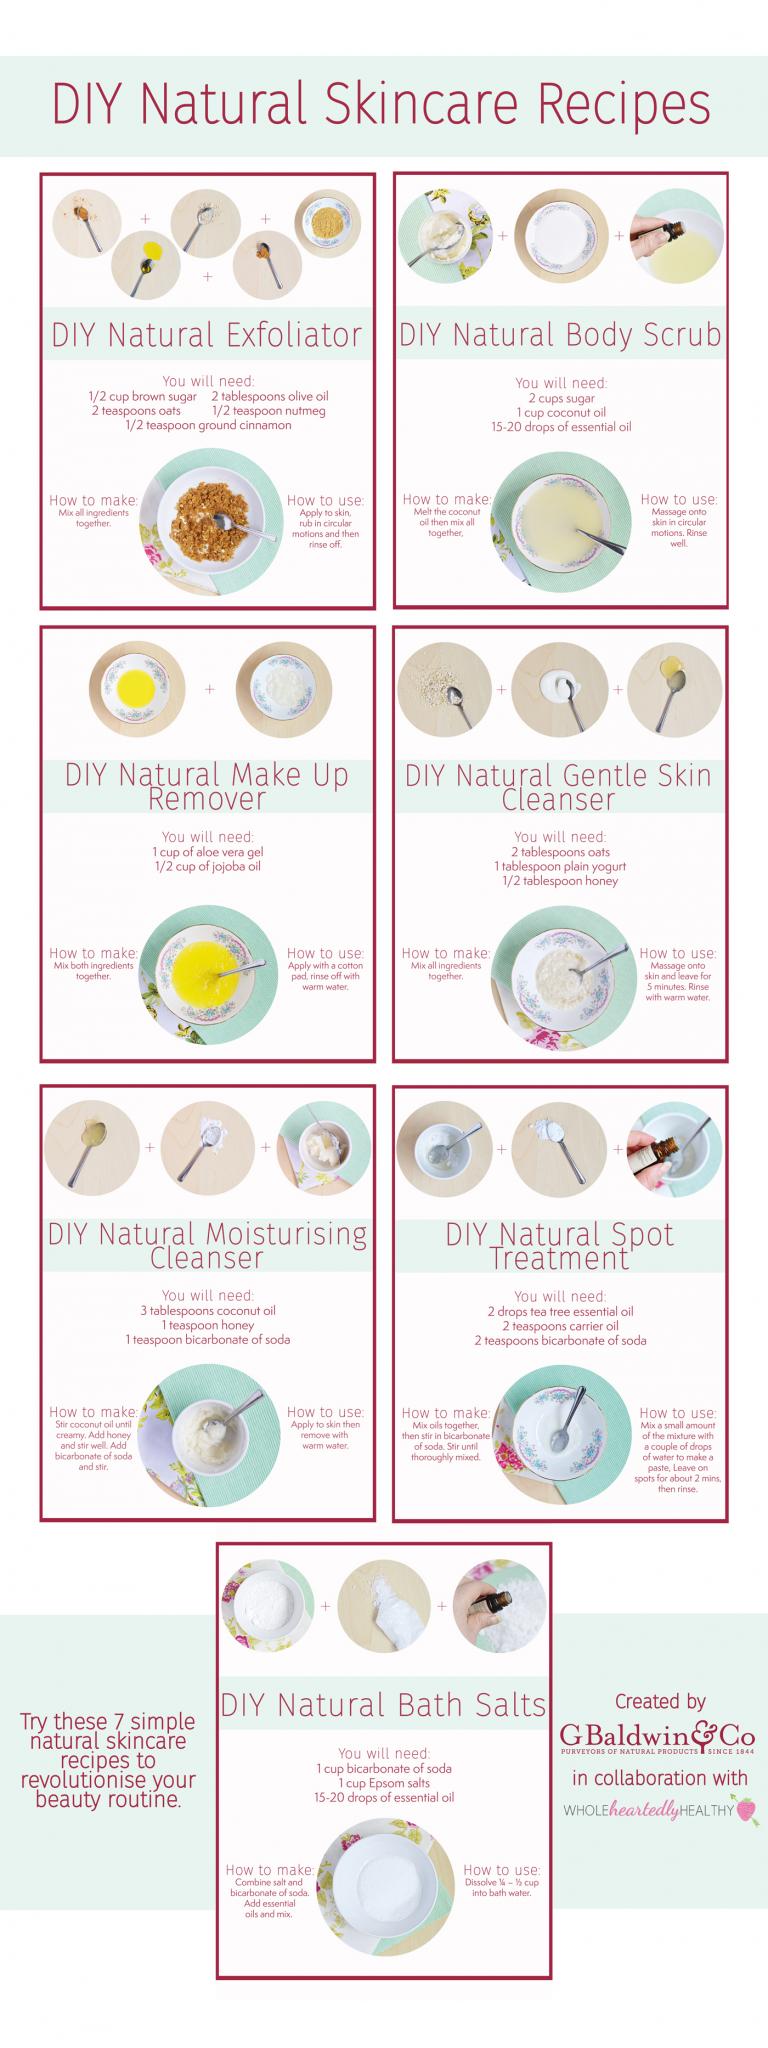 DIY Natural Skincare Recipes